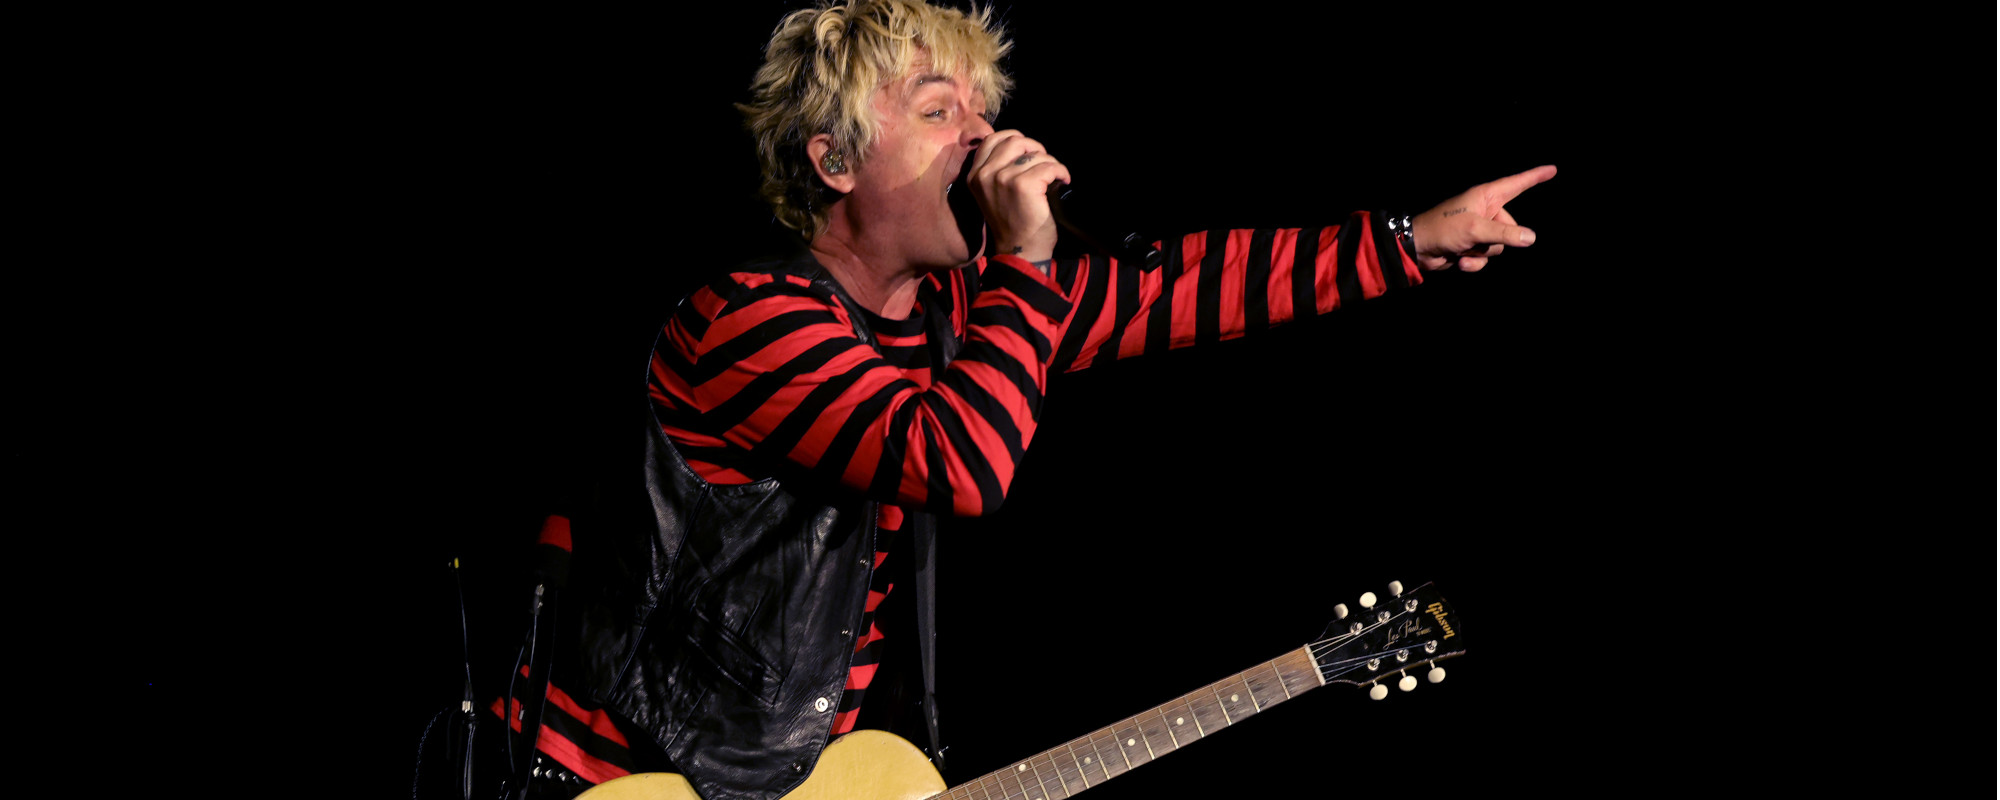 Green Day’s Billie Joe Armstrong Recalls “Heavy Experience” of Meeting Eddie Van Halen